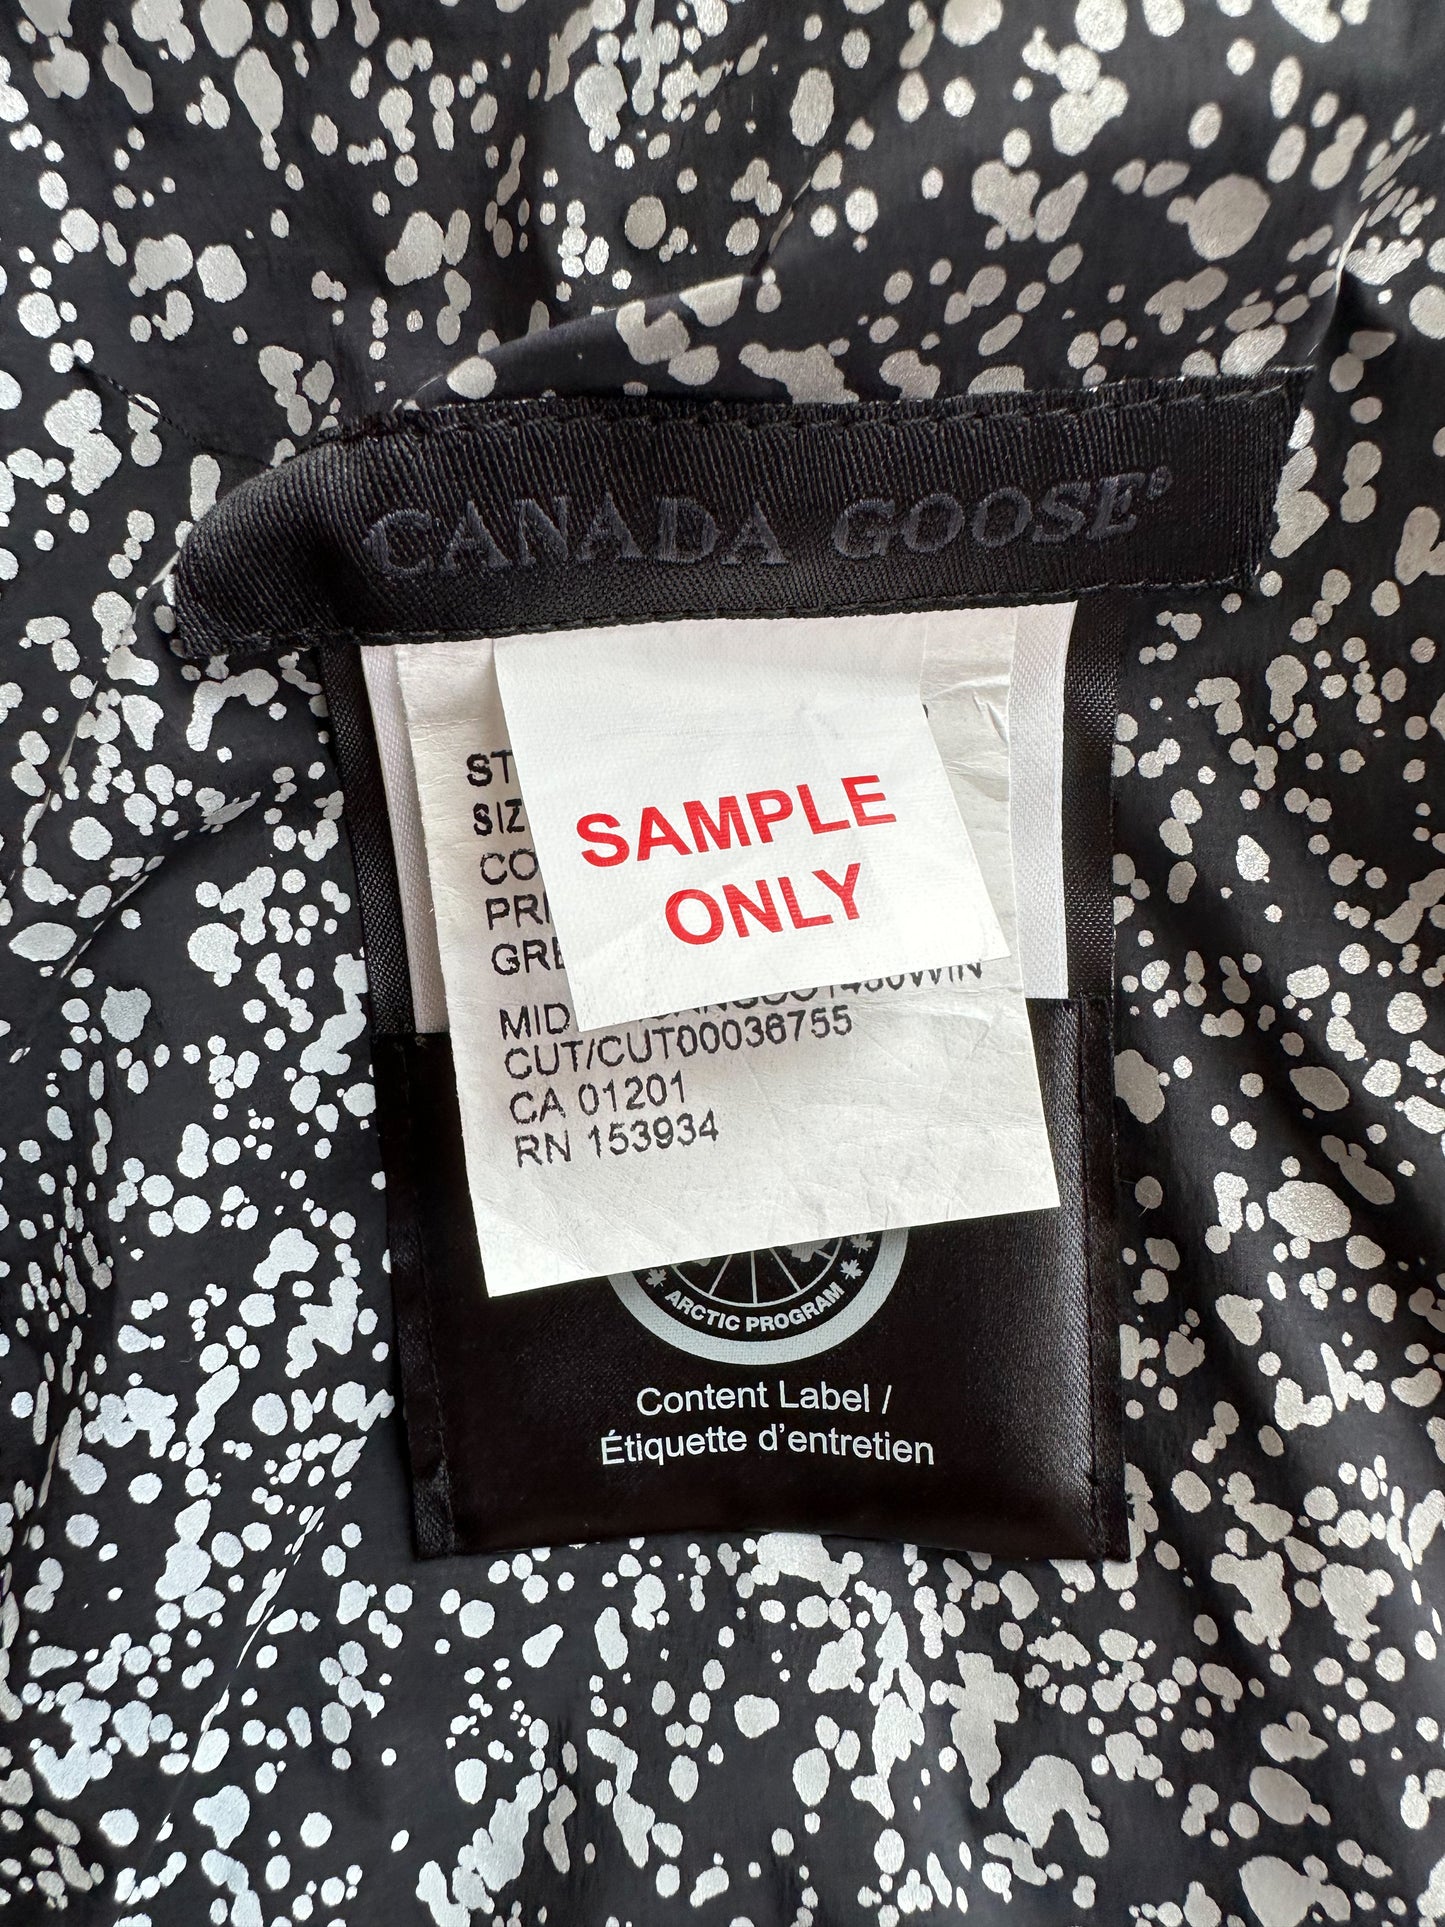 Canada Goose Black Reflective Hybridge CW Black Label Women's Jacket